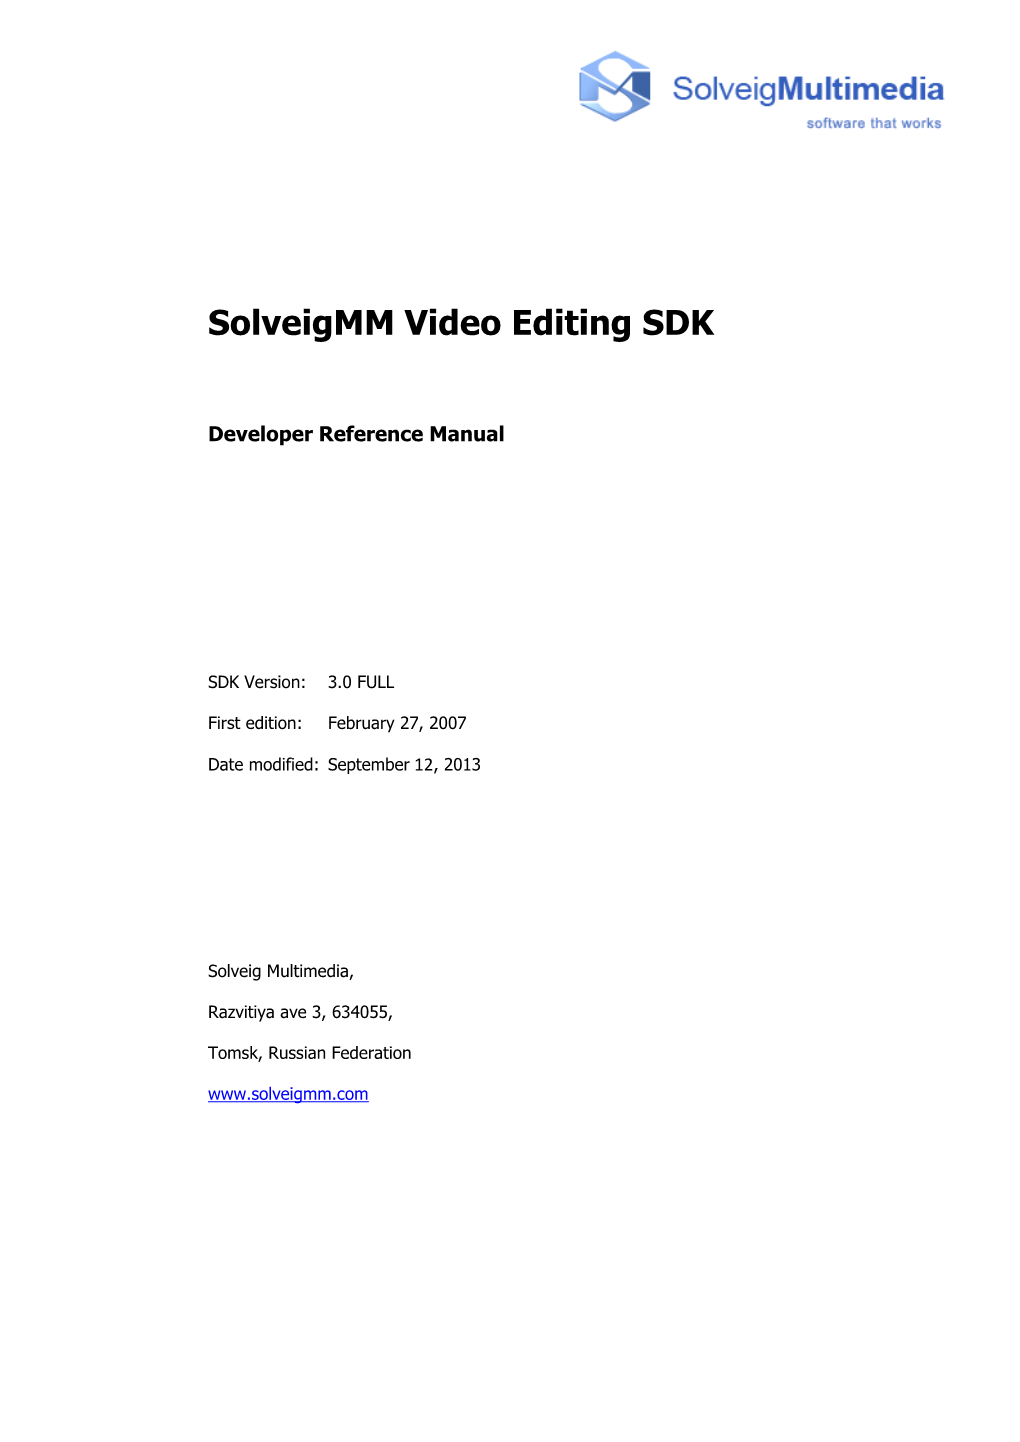 Solveigmm Video Editing SDK